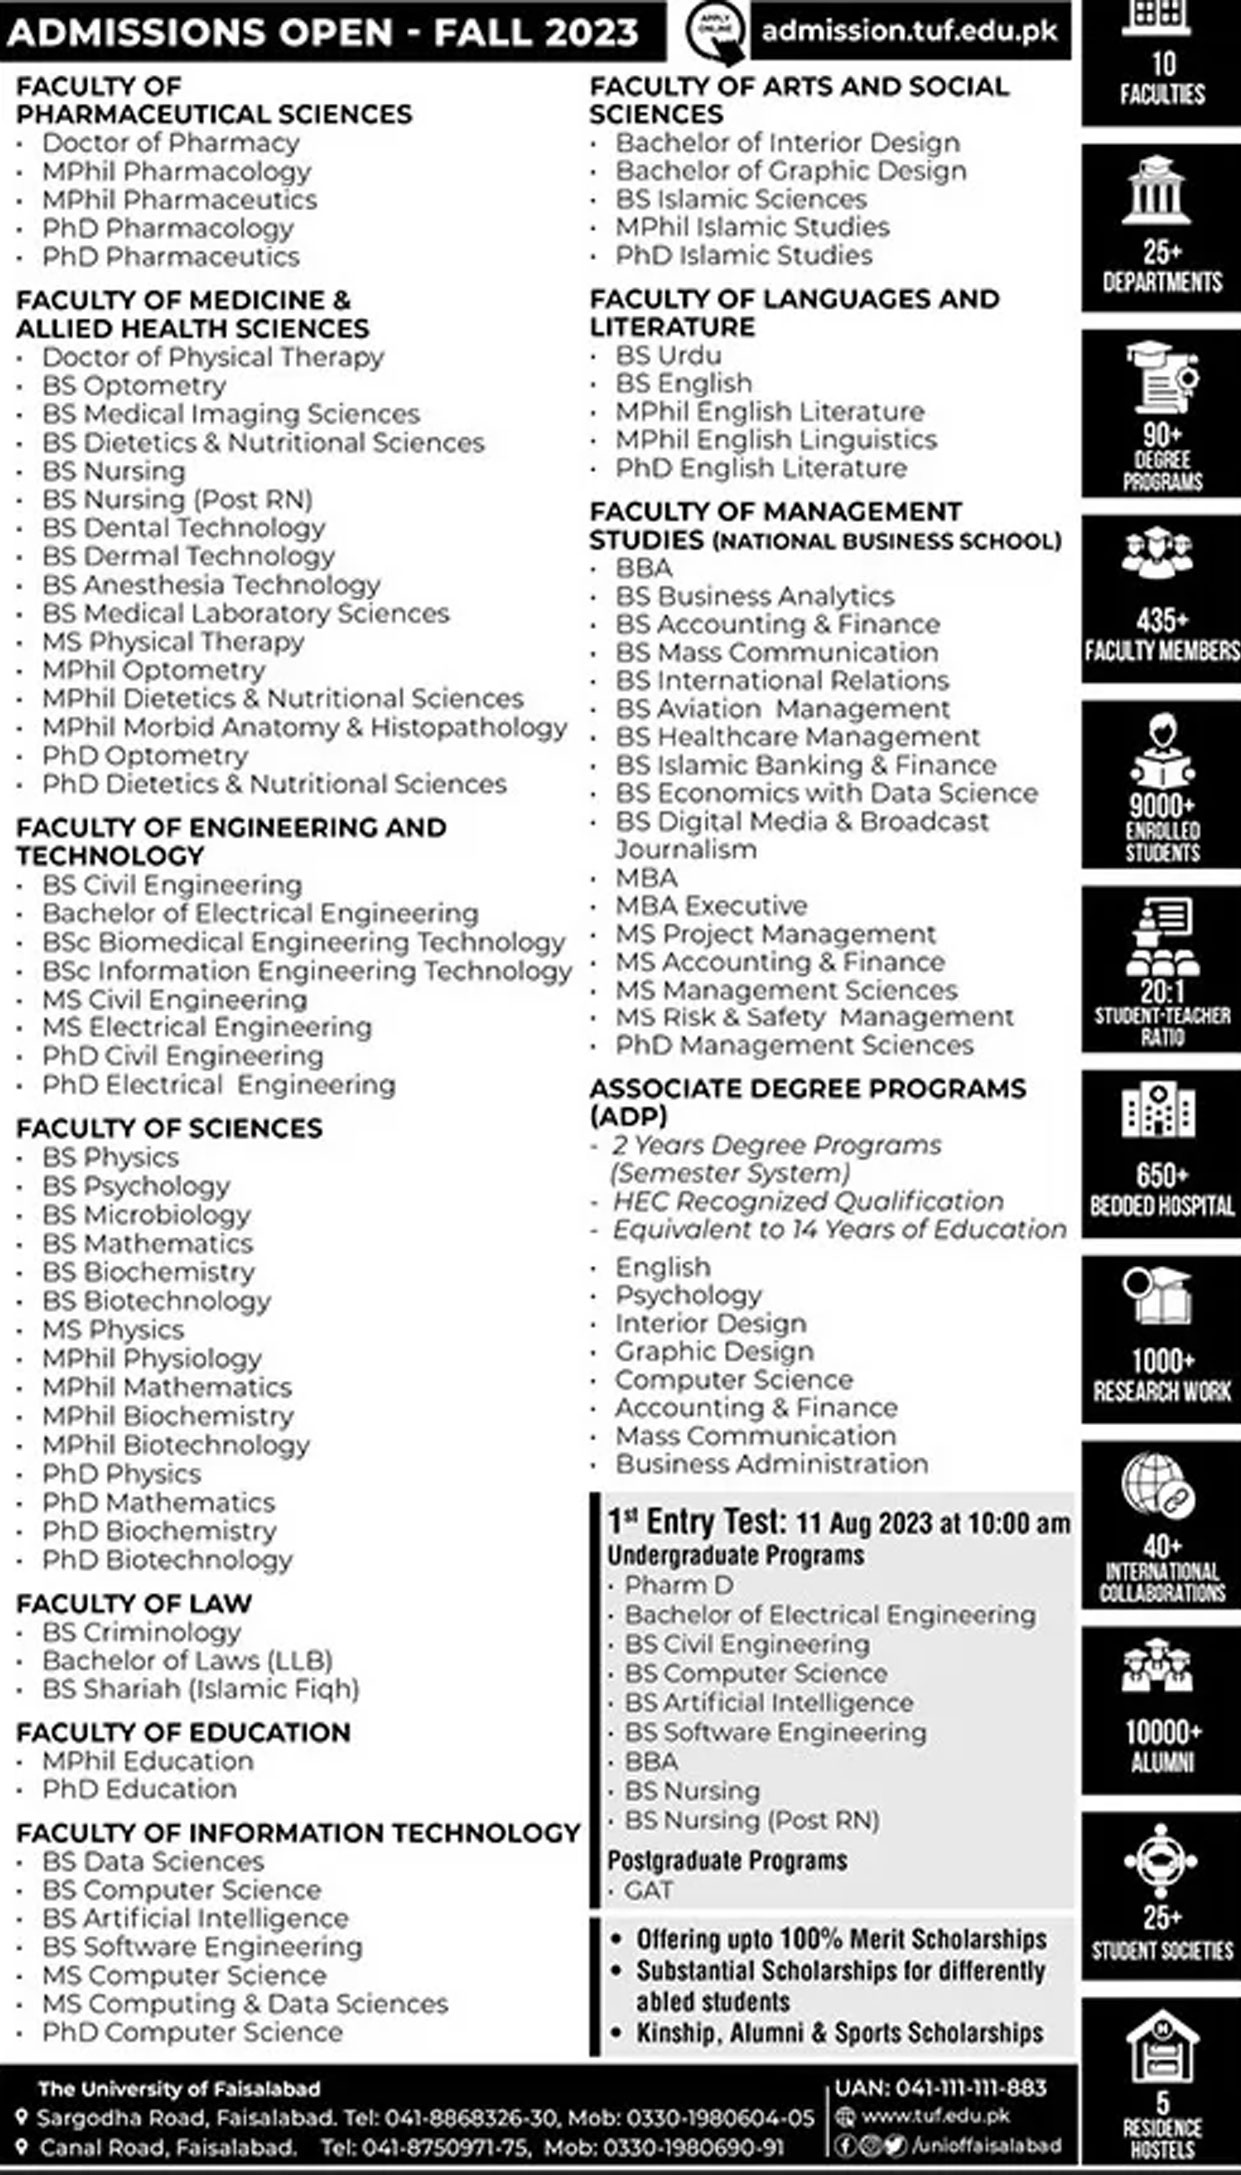 The University Of Faisalabad Admission 2023